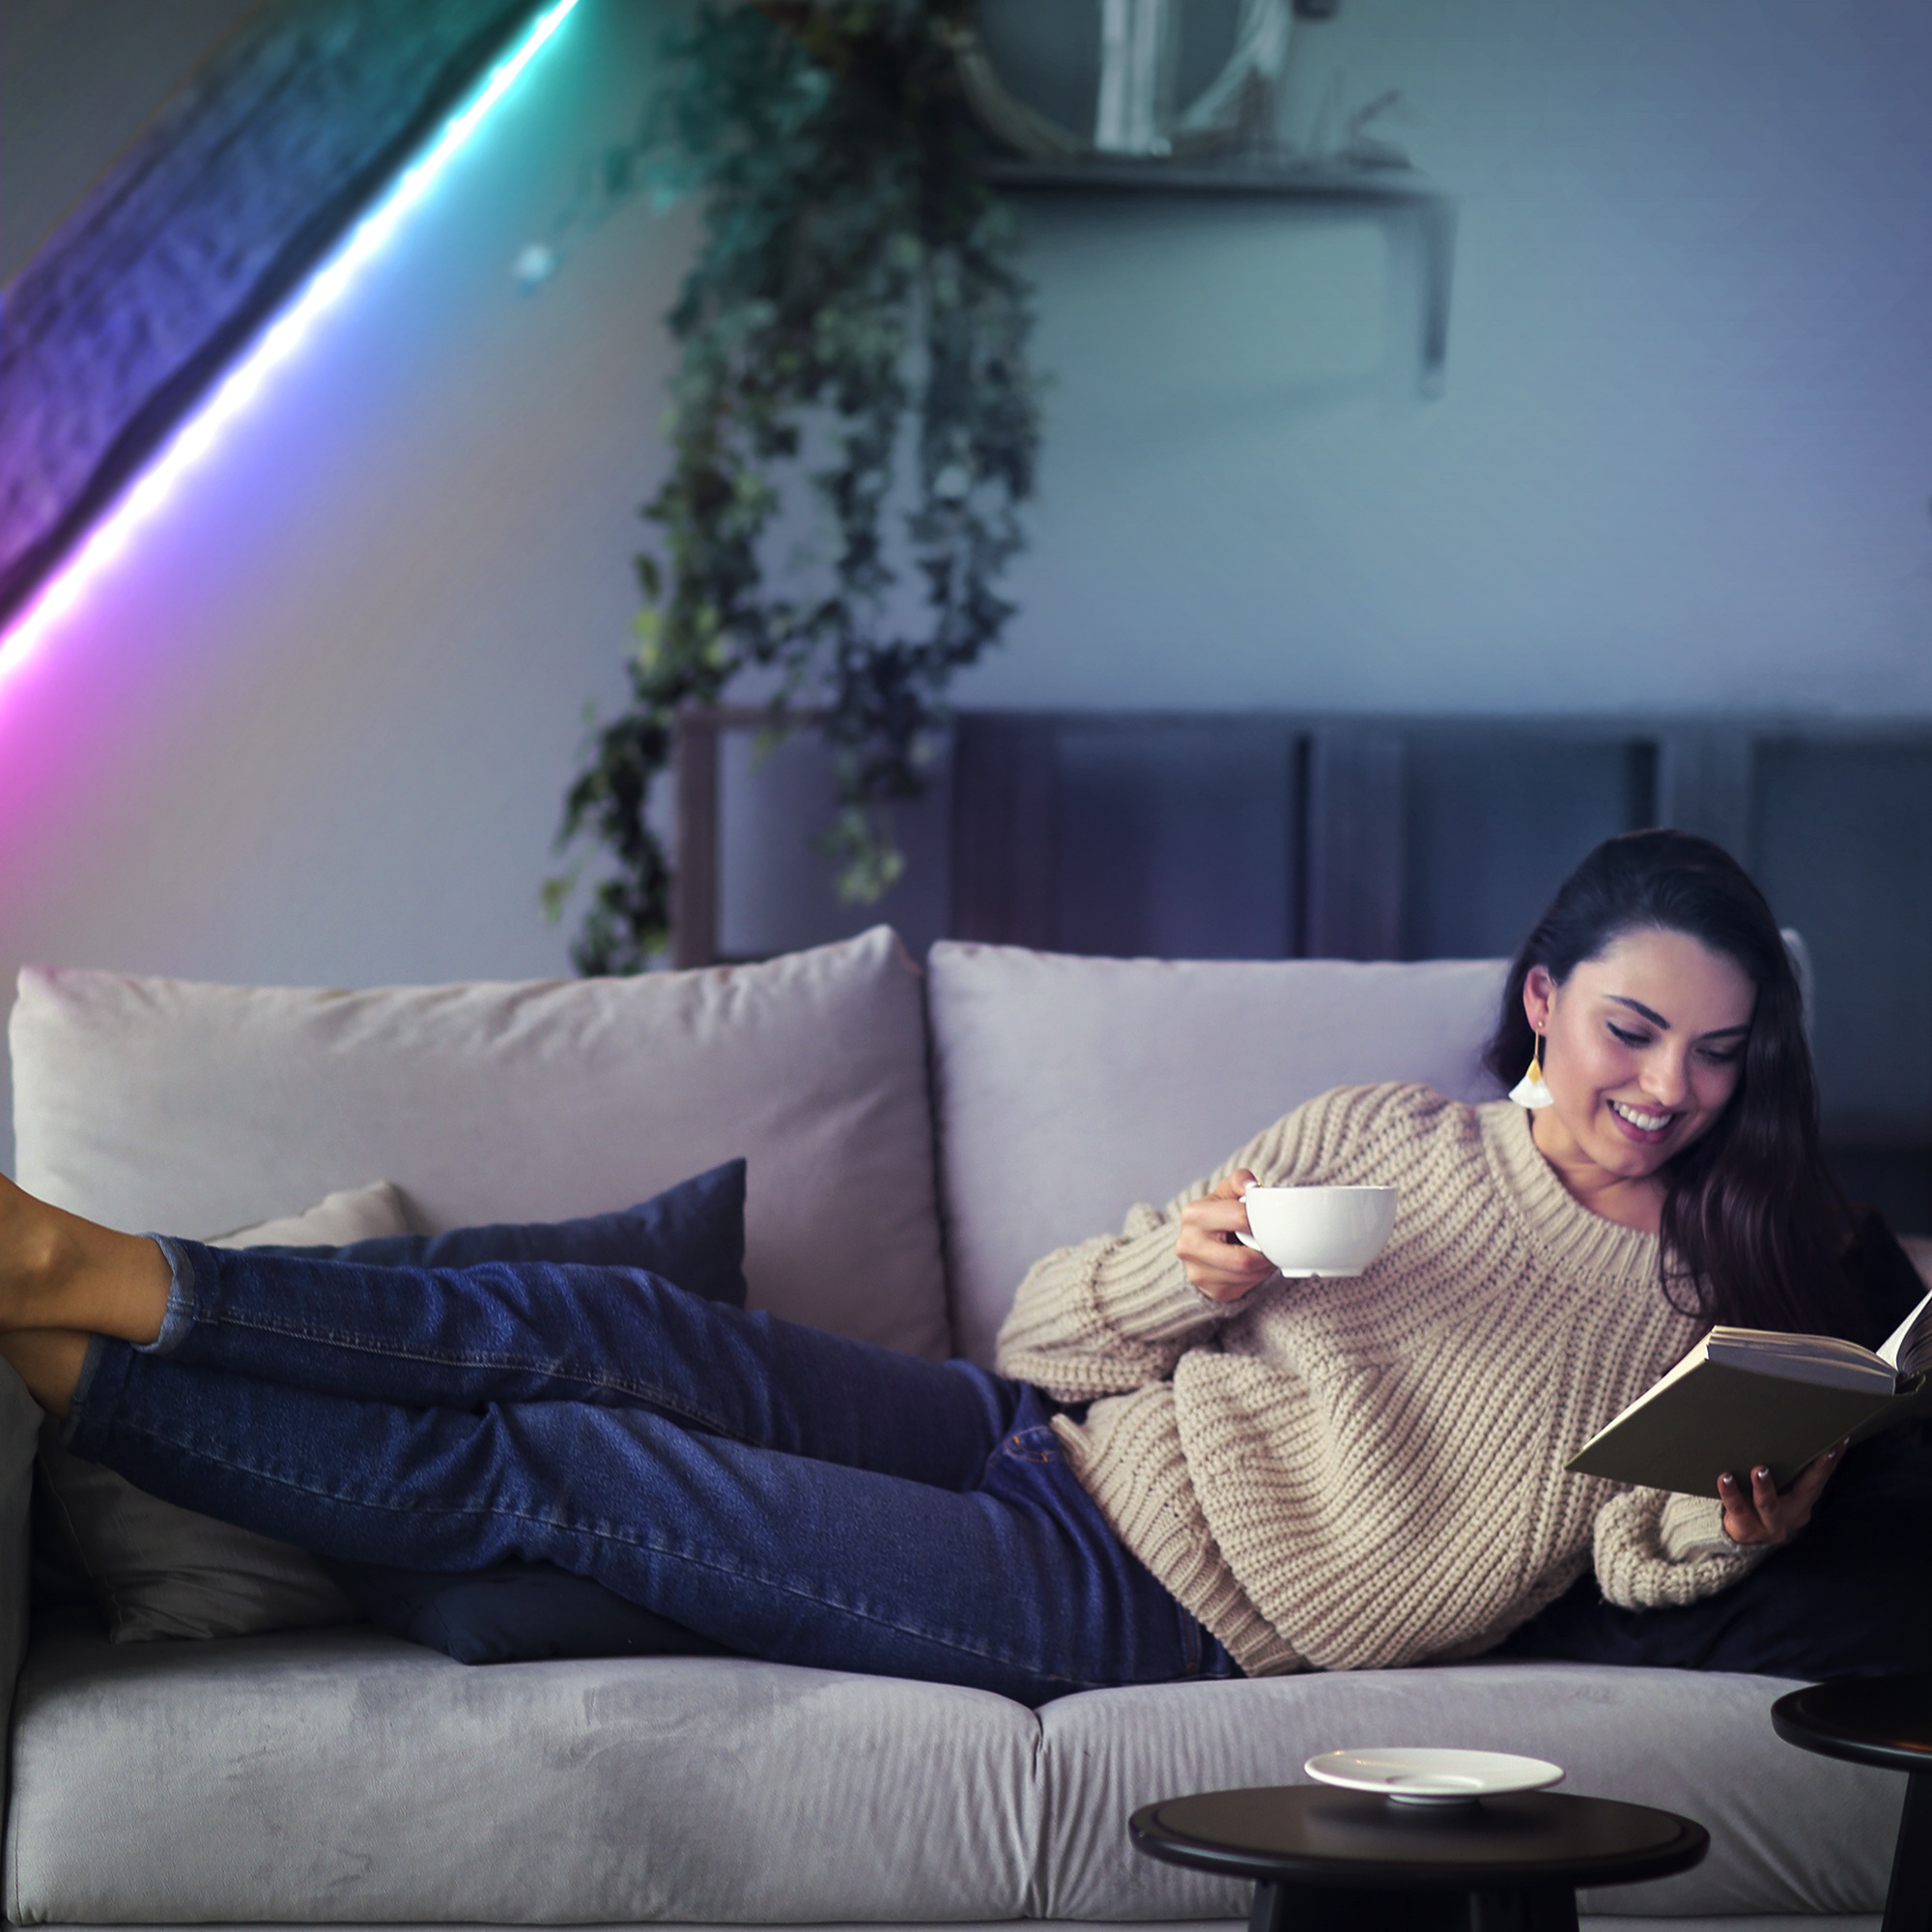 B.K.Licht LED Stripe »Wifi RGBIC LED Strip, 5 m, mit App Steuerung«, 150 St.-flammig, Lichtleiste, mit Musiksensor, smartes LED Band, Selbstklebend